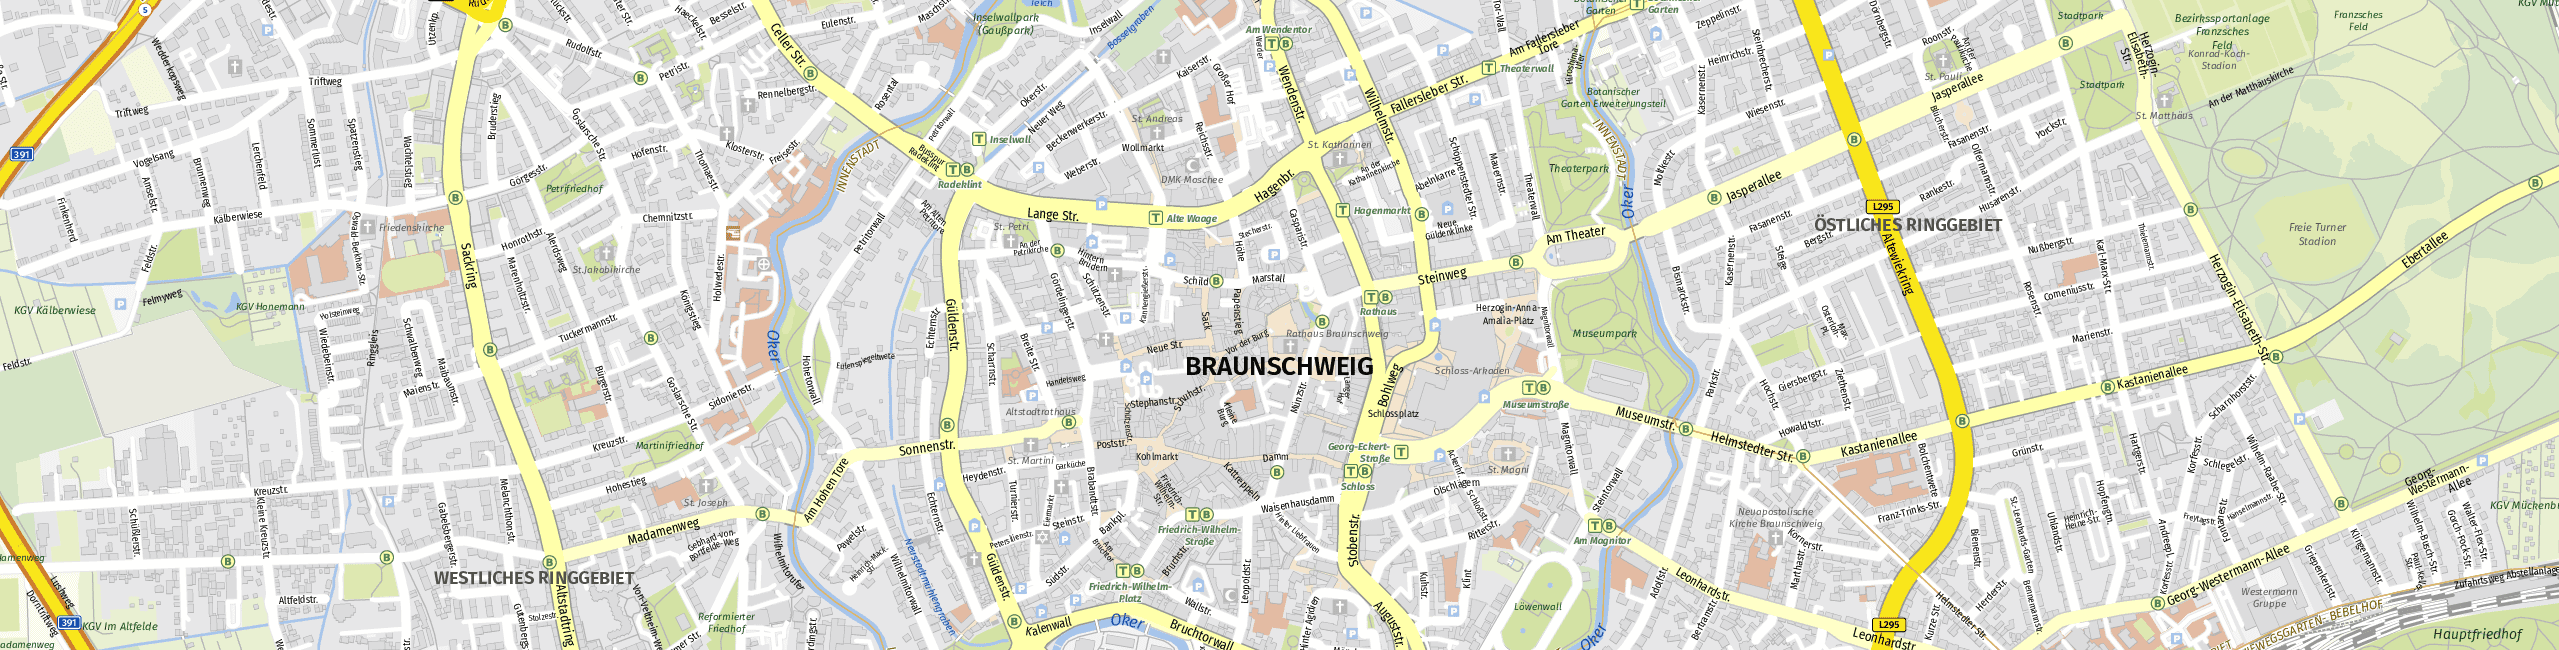 Stadtplan Braunschweig zum Downloaden.